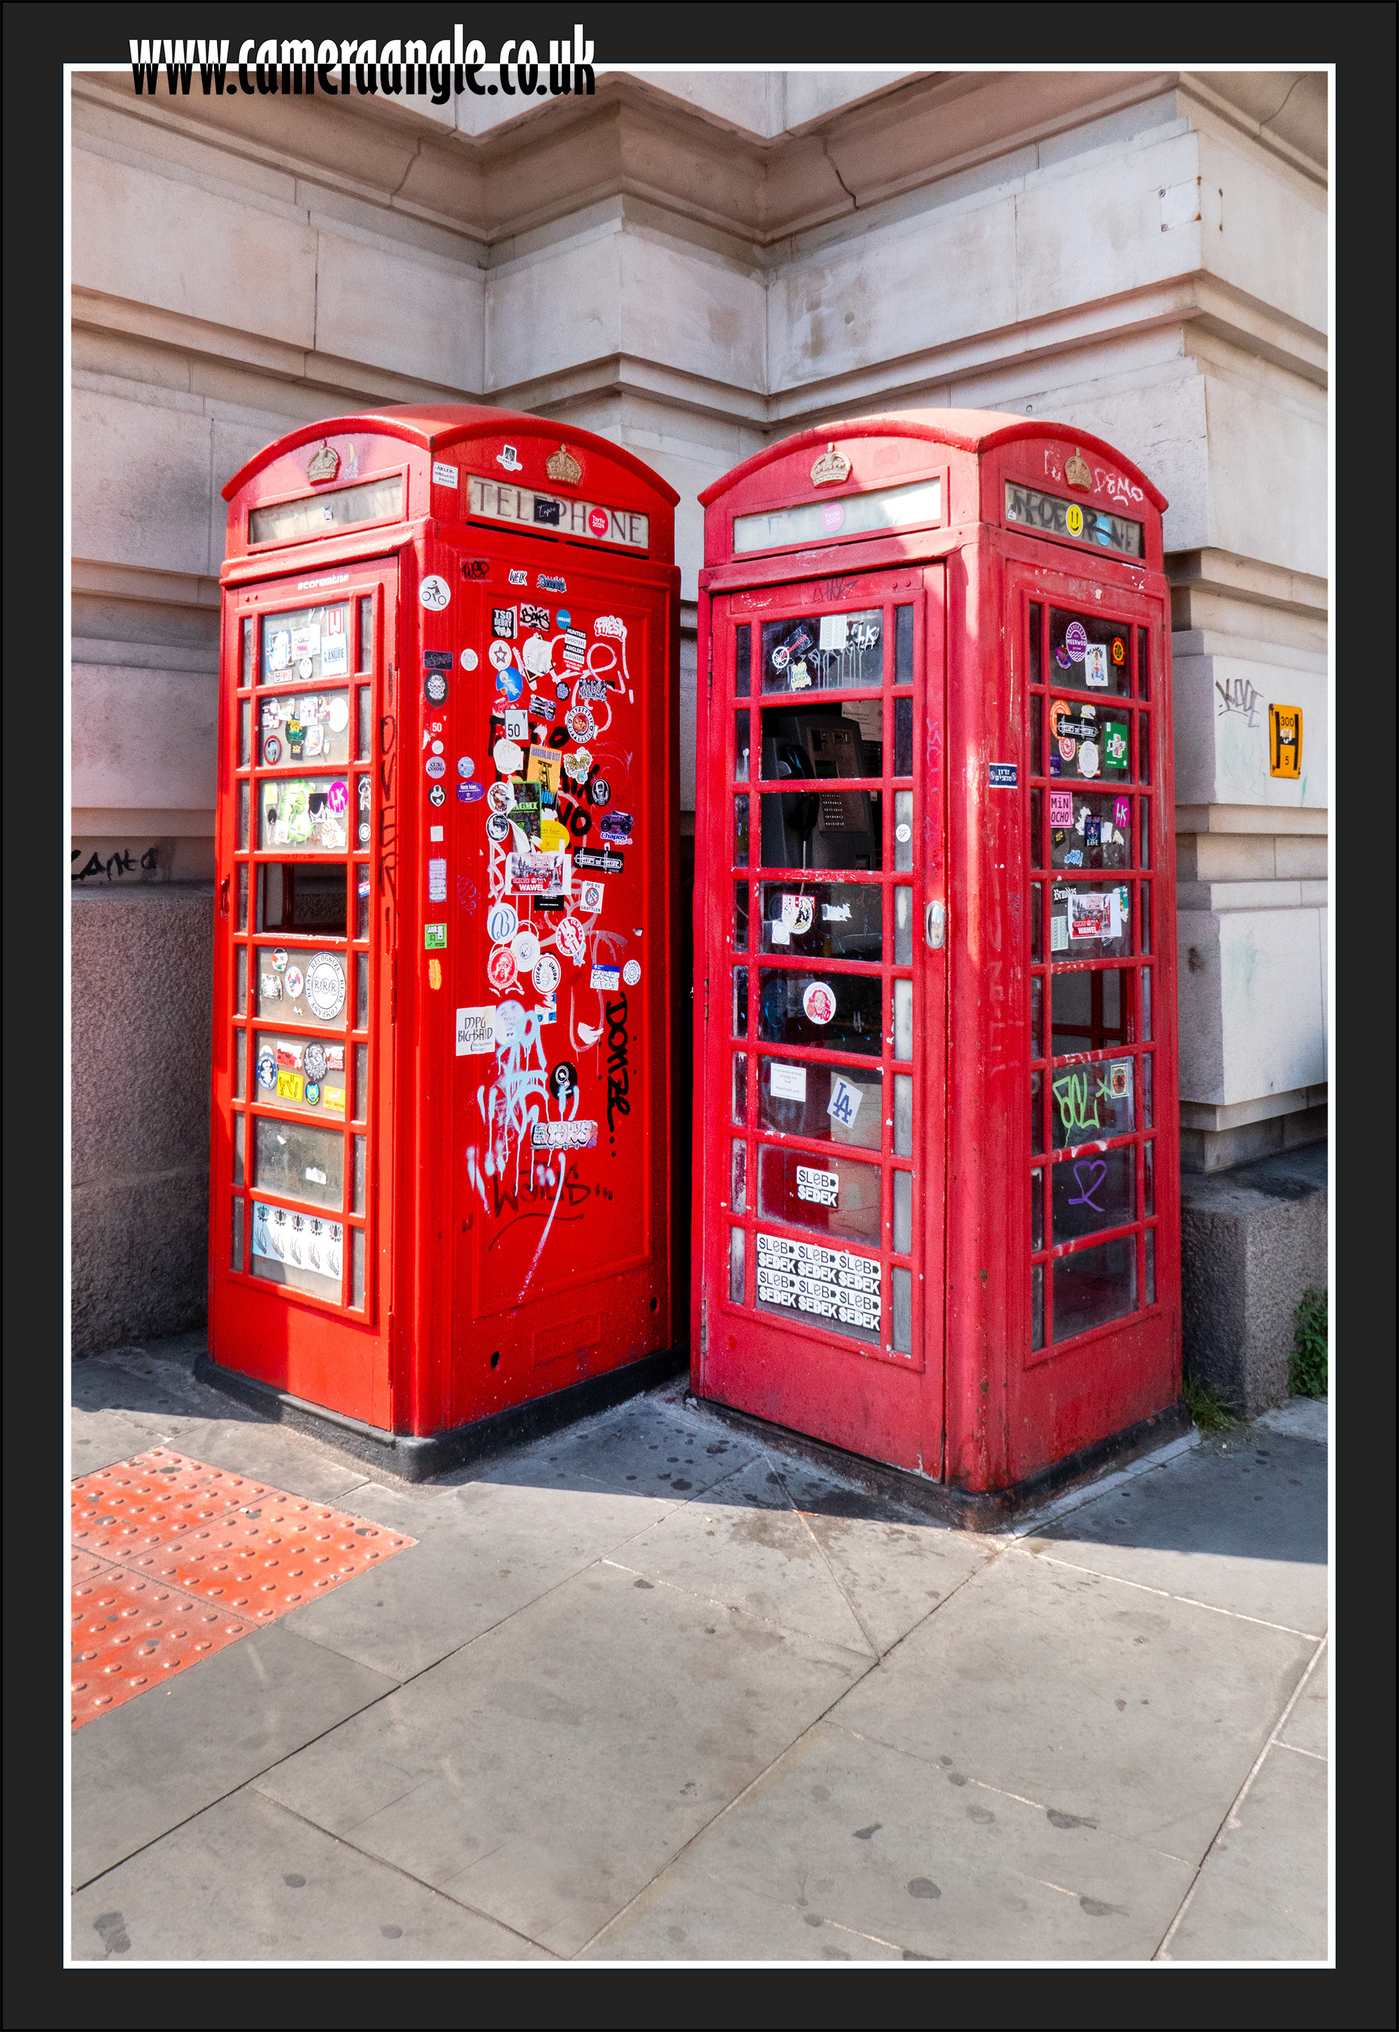 London_Phone_Box
London Telephone Boxes
Keywords: London Telephone Boxes